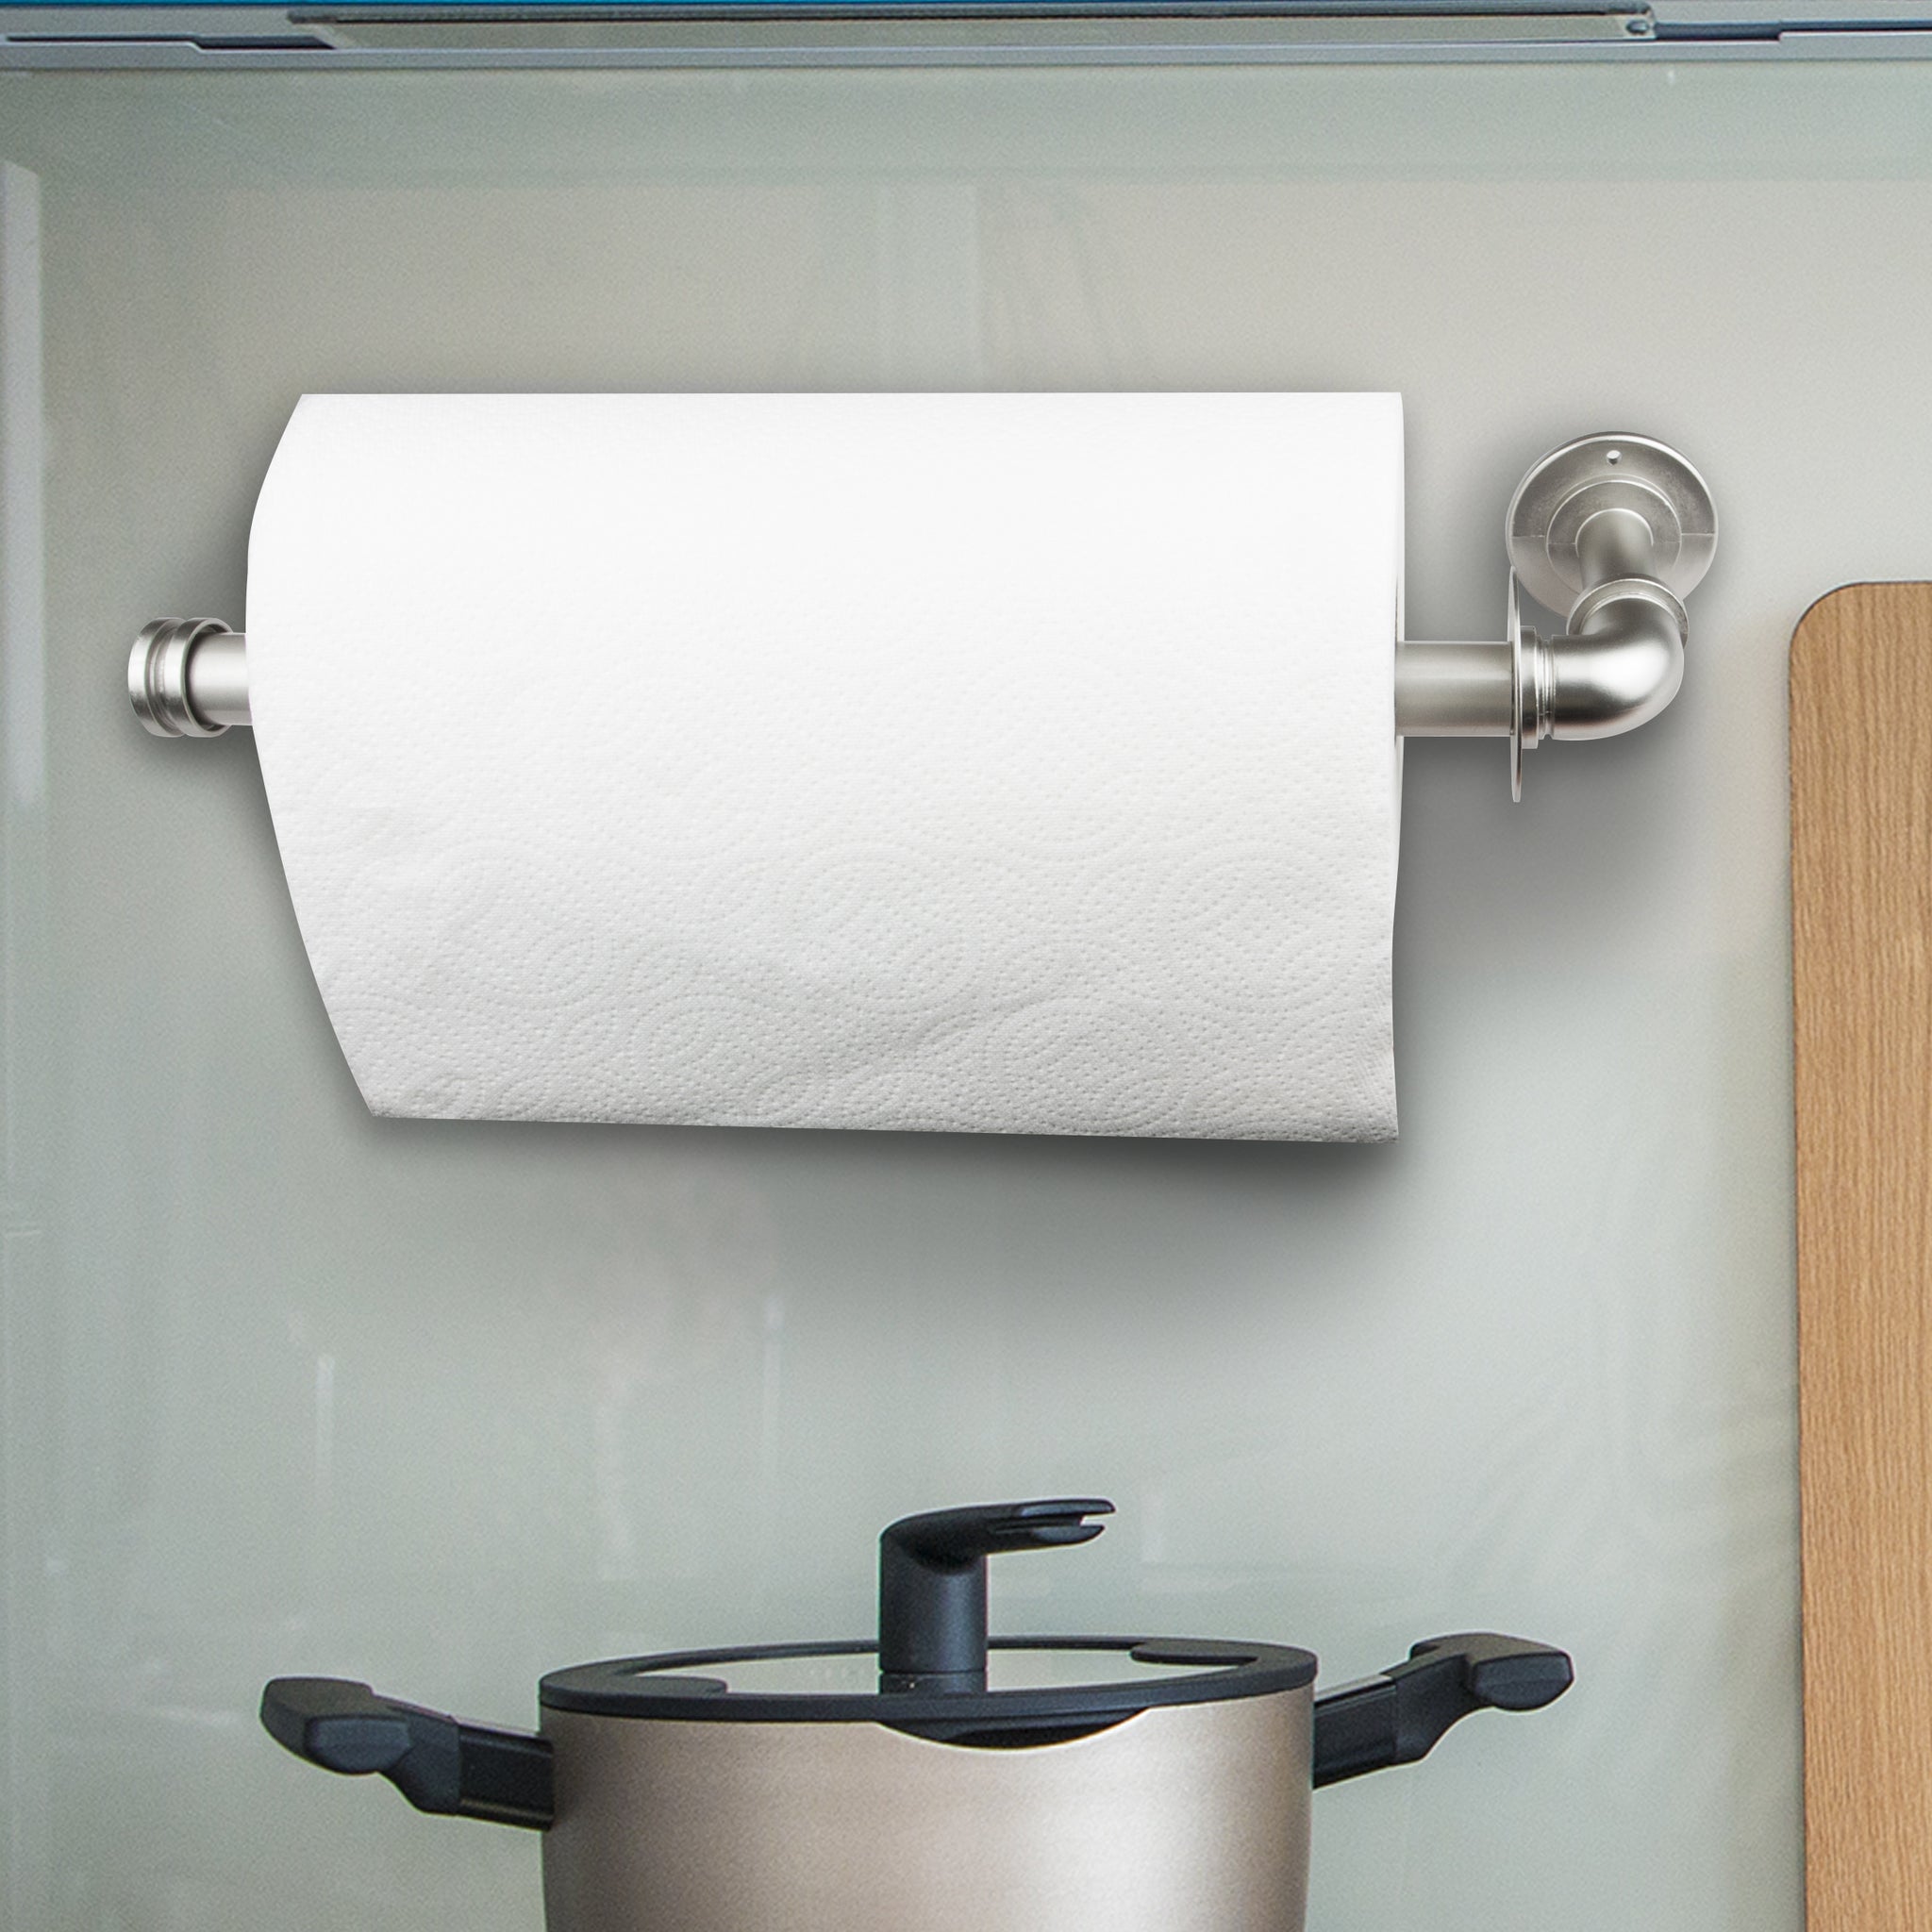 Kitchen Paper Towel Holder Under Cabinet - Toilet Roll Holder Wall